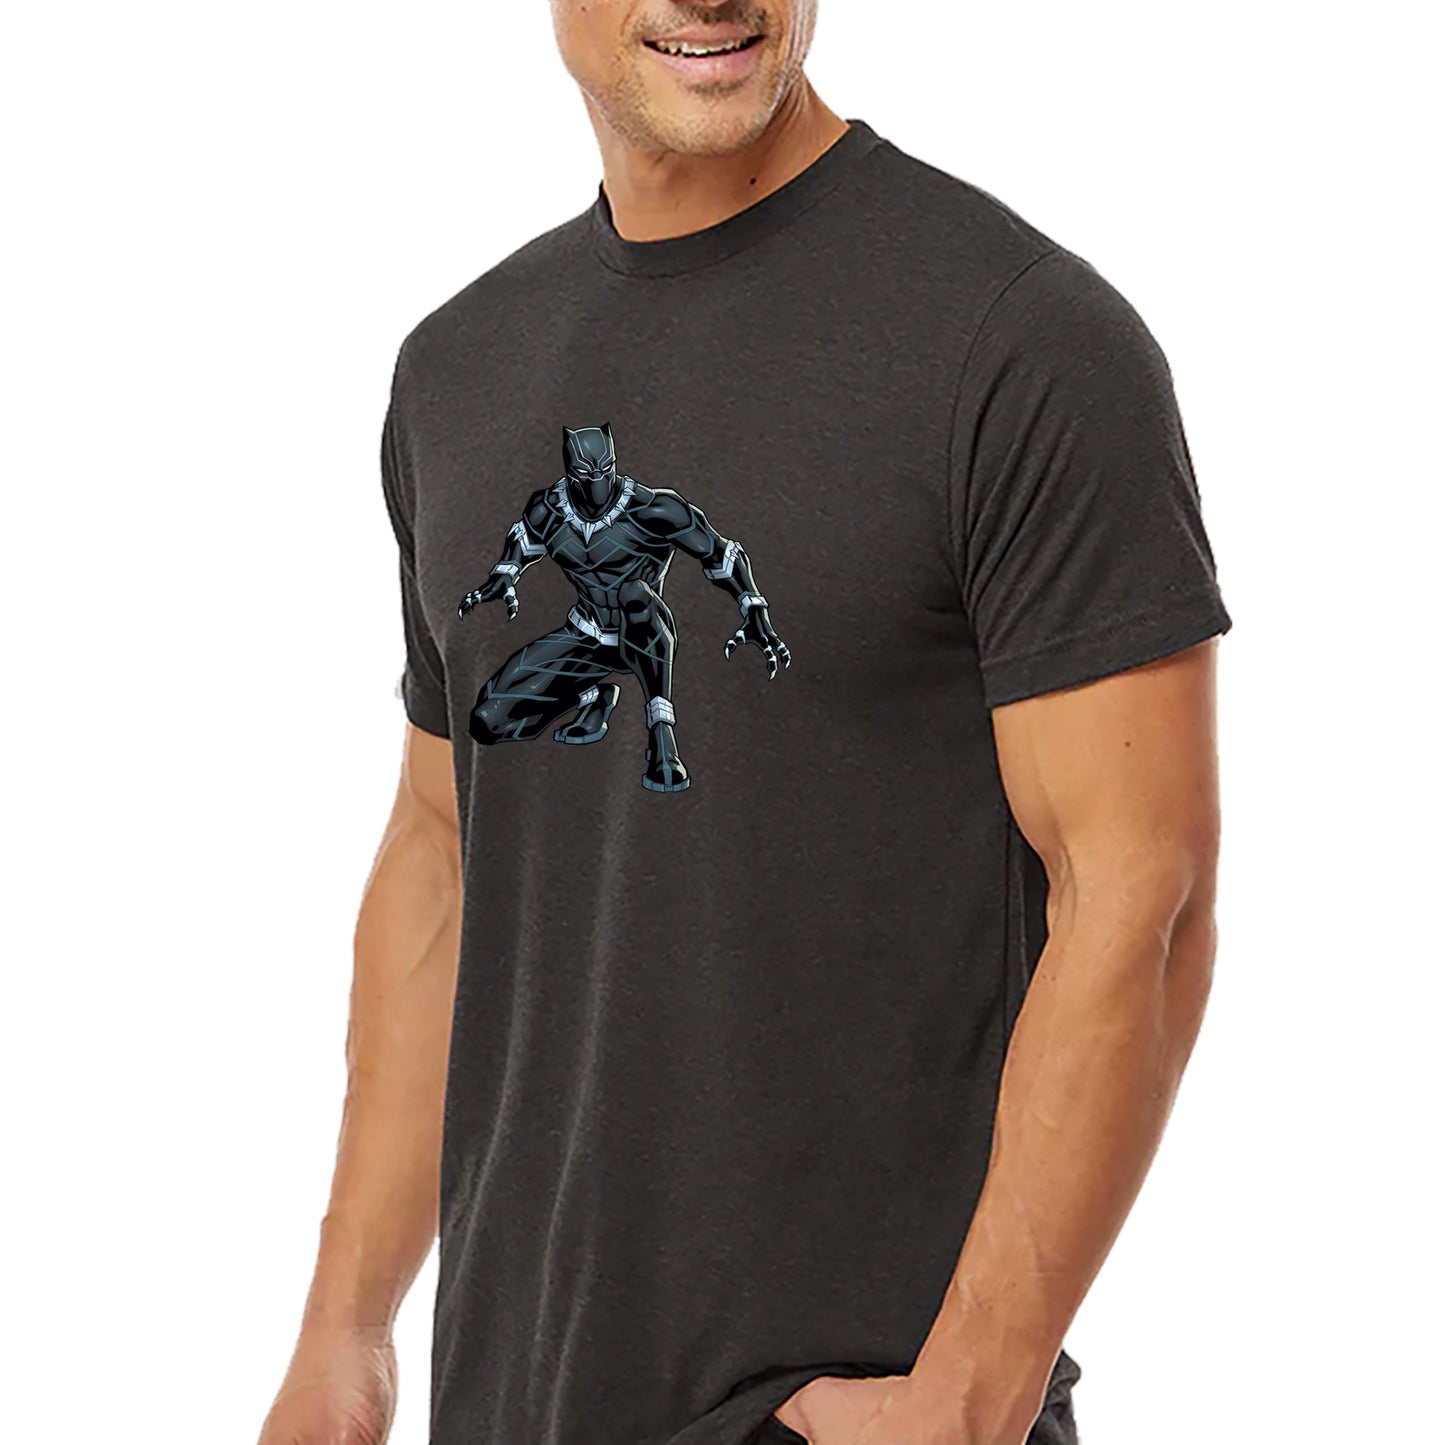 Black Panter Design T-shirt